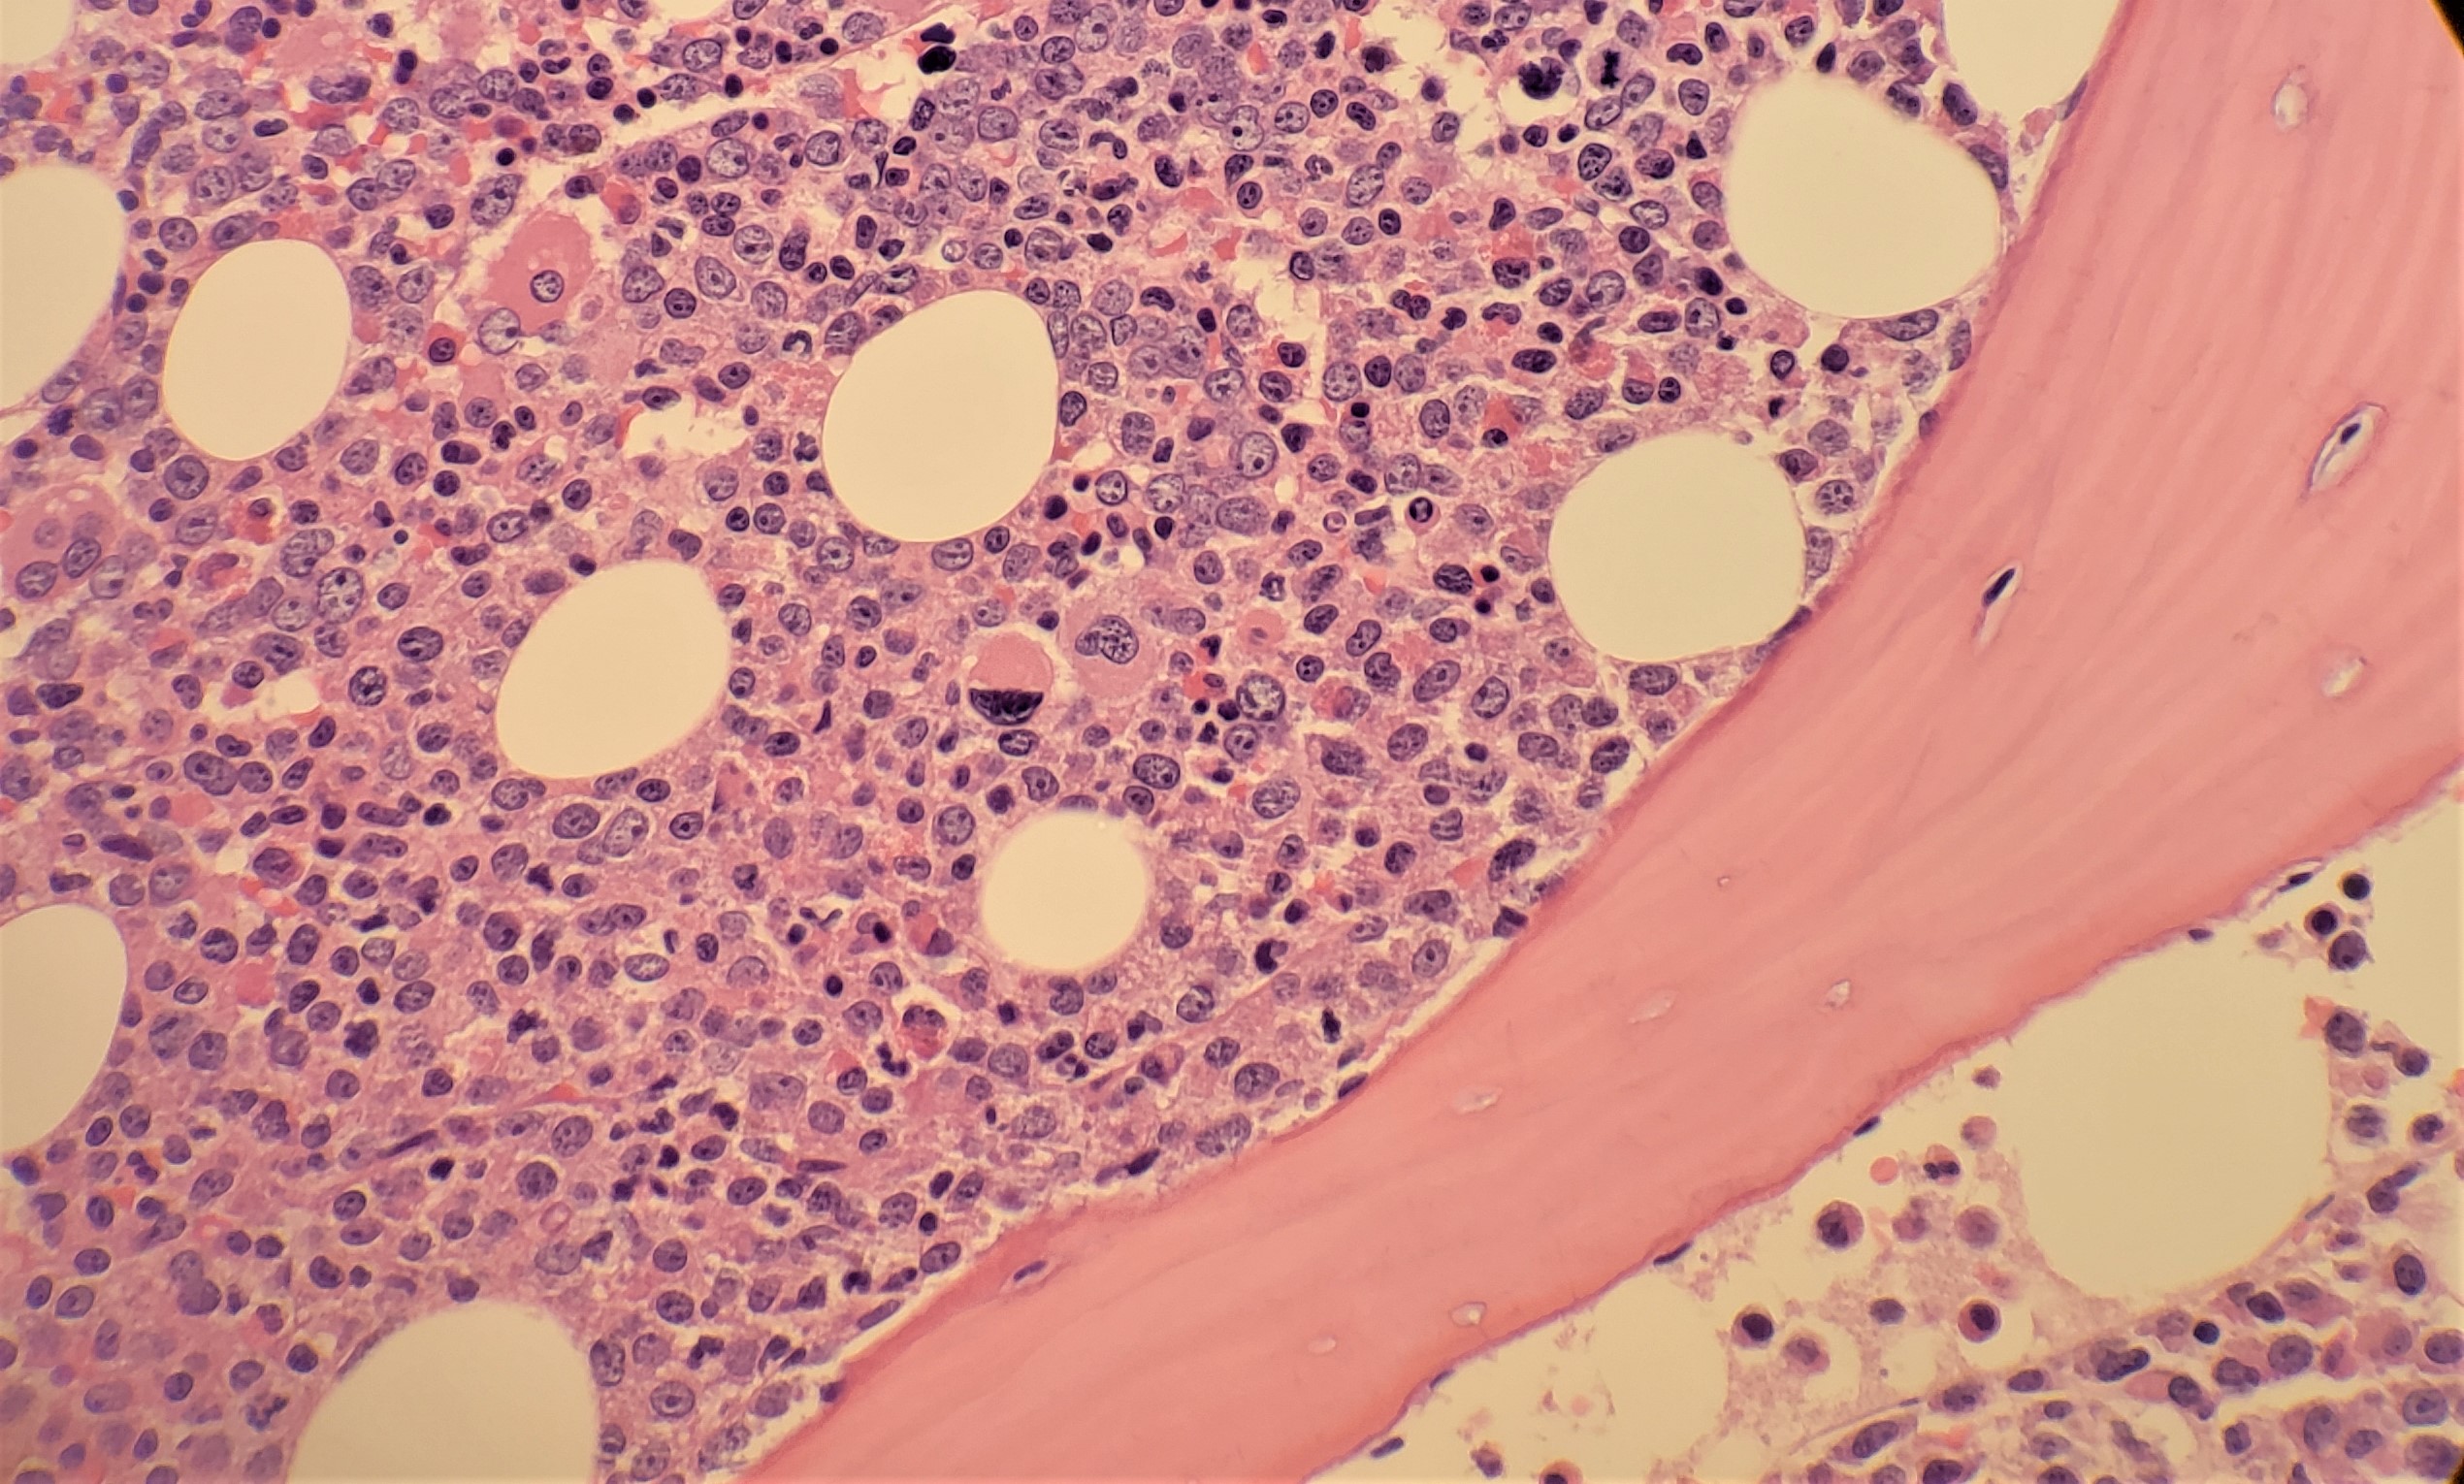 Bone marrow biopsy of Chronic Myeloid Leukemia showing hypercellularity and expansion of immature granulocytic paratrabecular